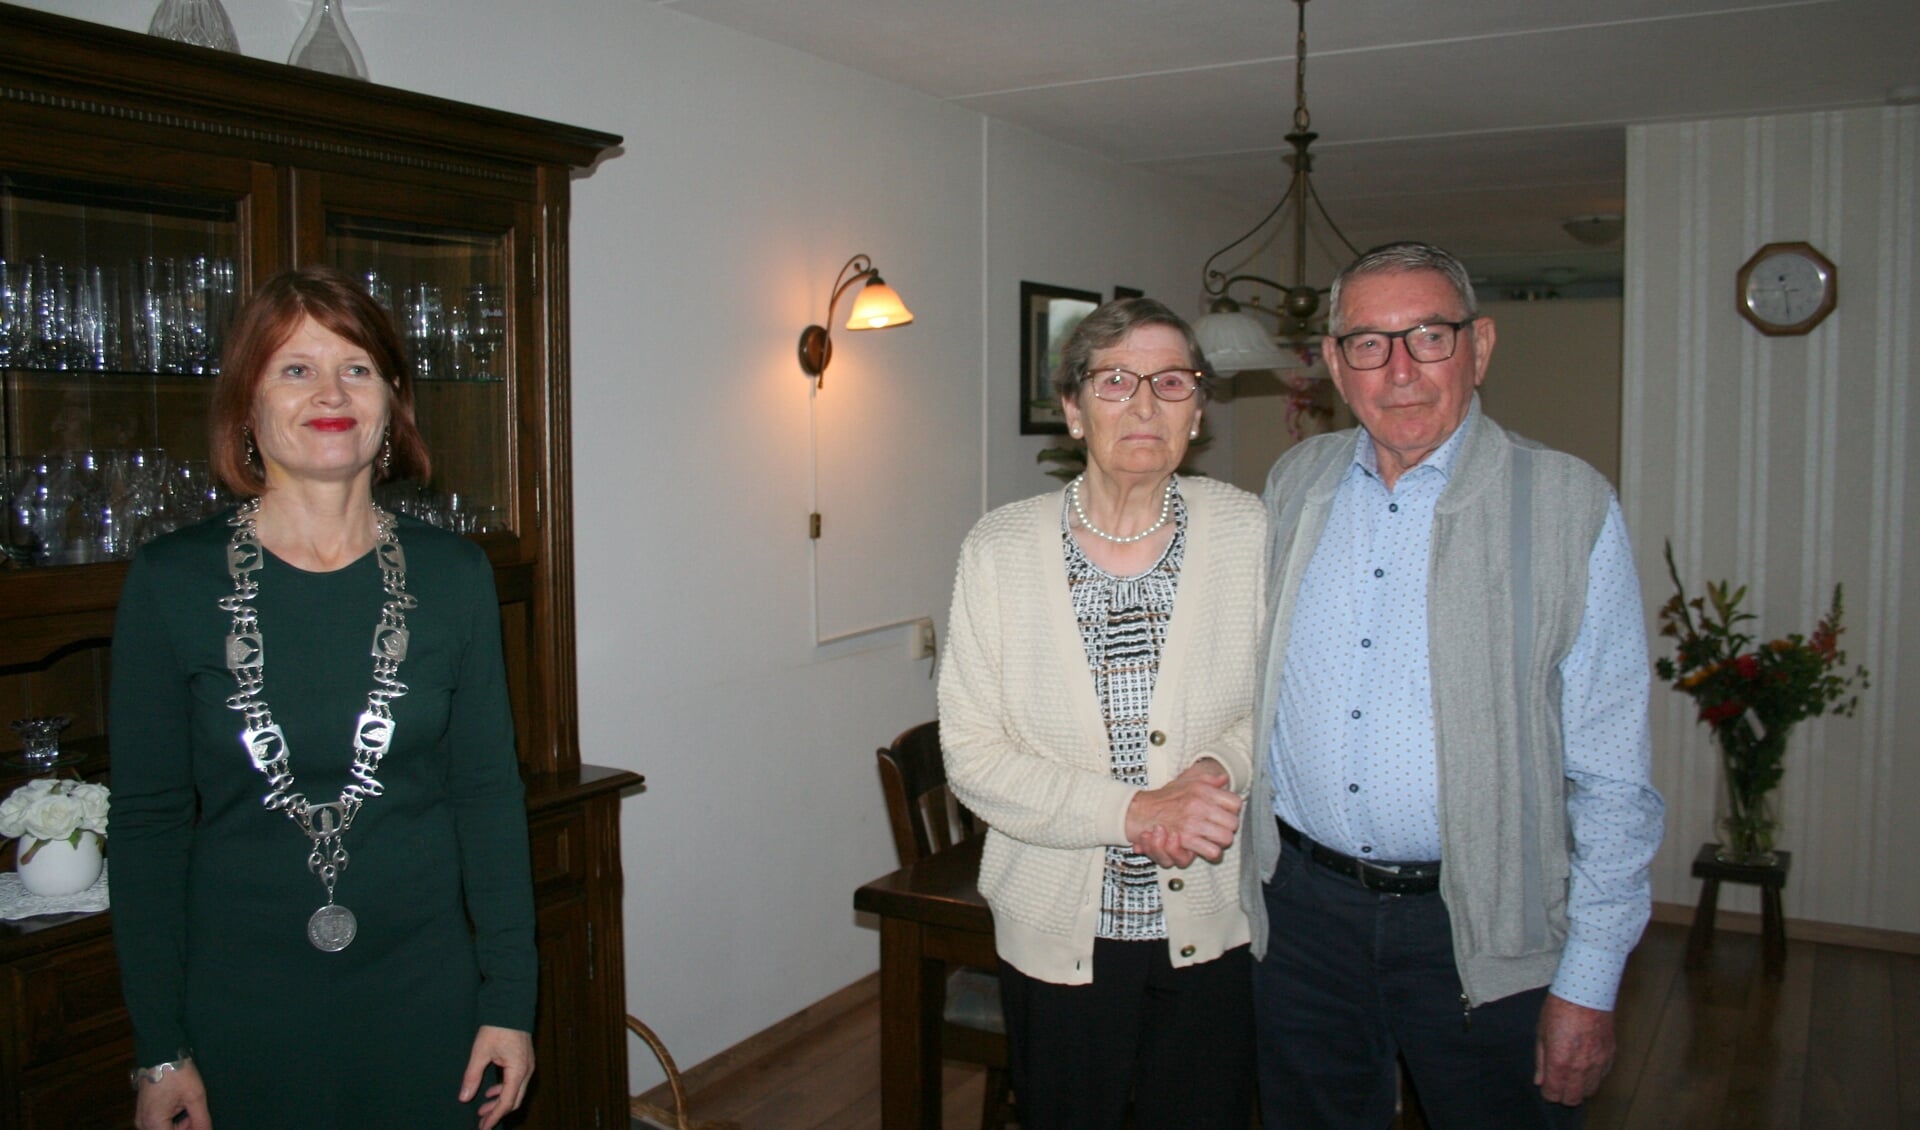 Het echtpaar Mink-Brinks vierde afgelopen weekend hun 60-jarig jubileum in Losser. Burgemeester Cia Kroon kwam langs om hen te feliciteren.